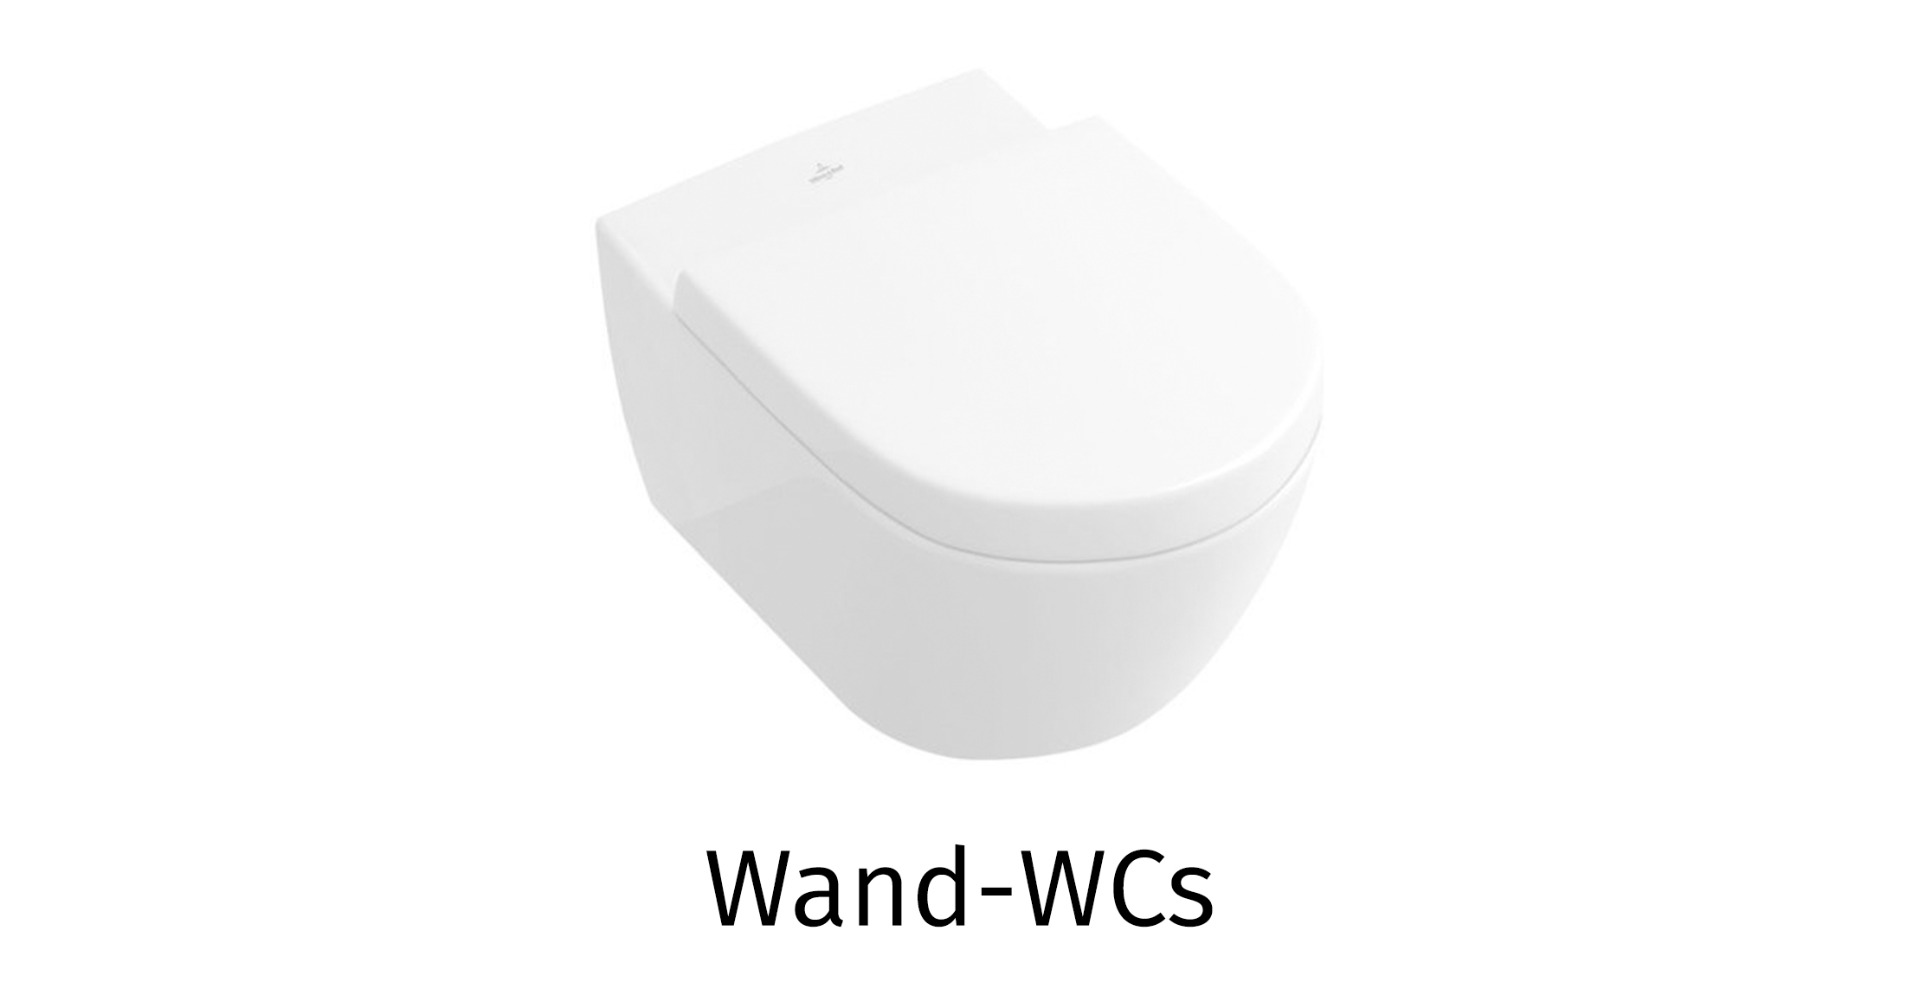 Wand-WC